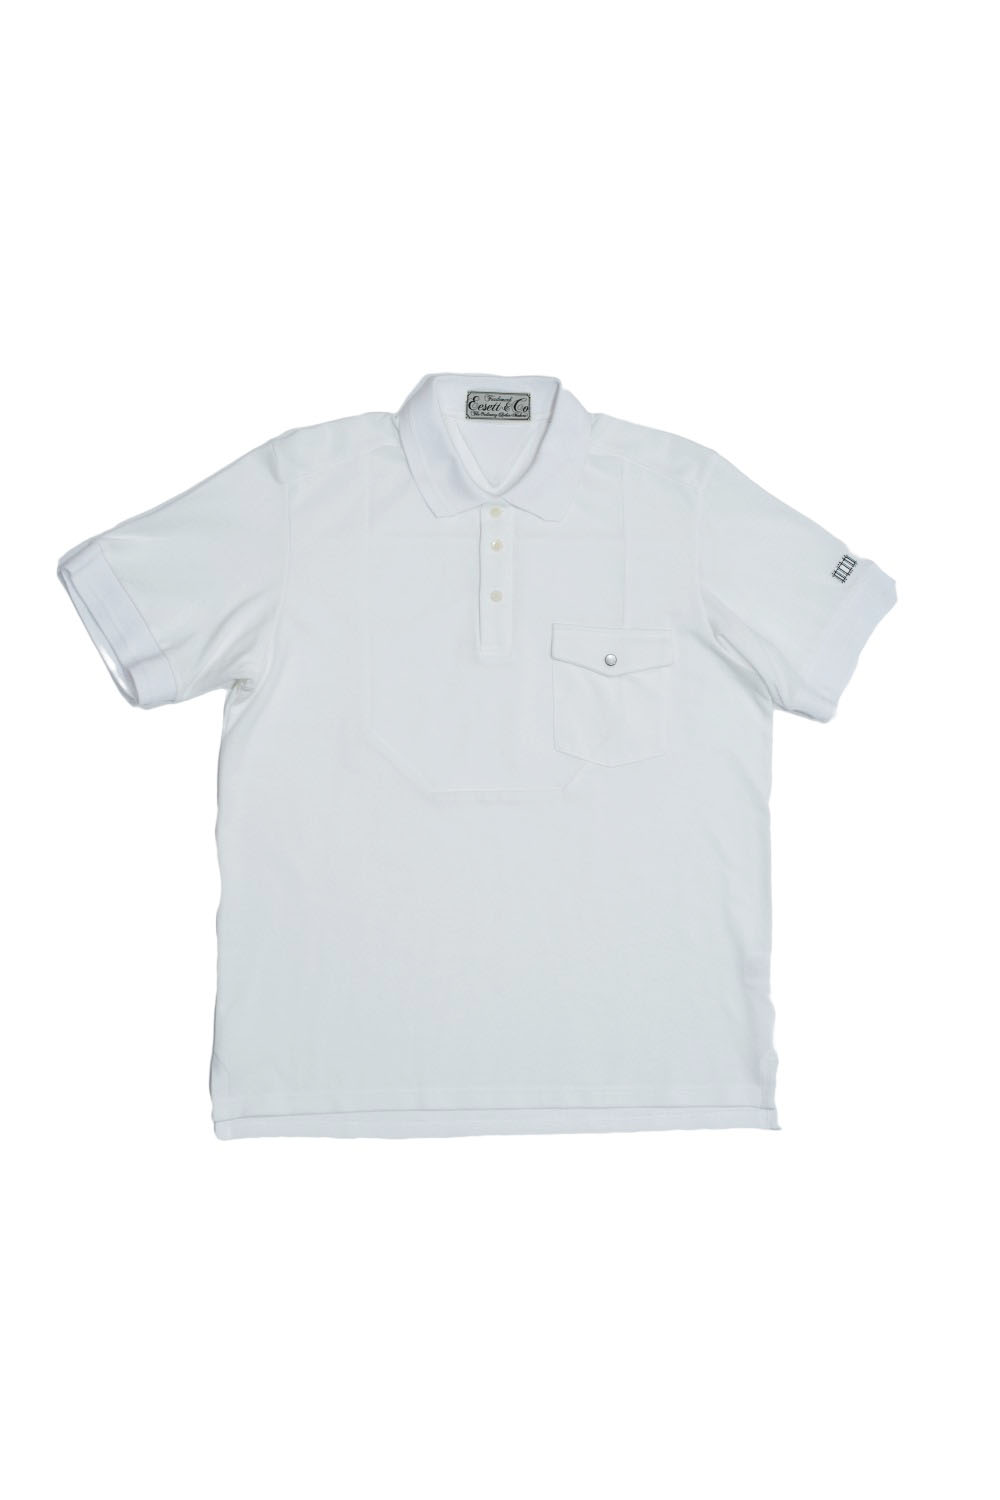 polo shirt white